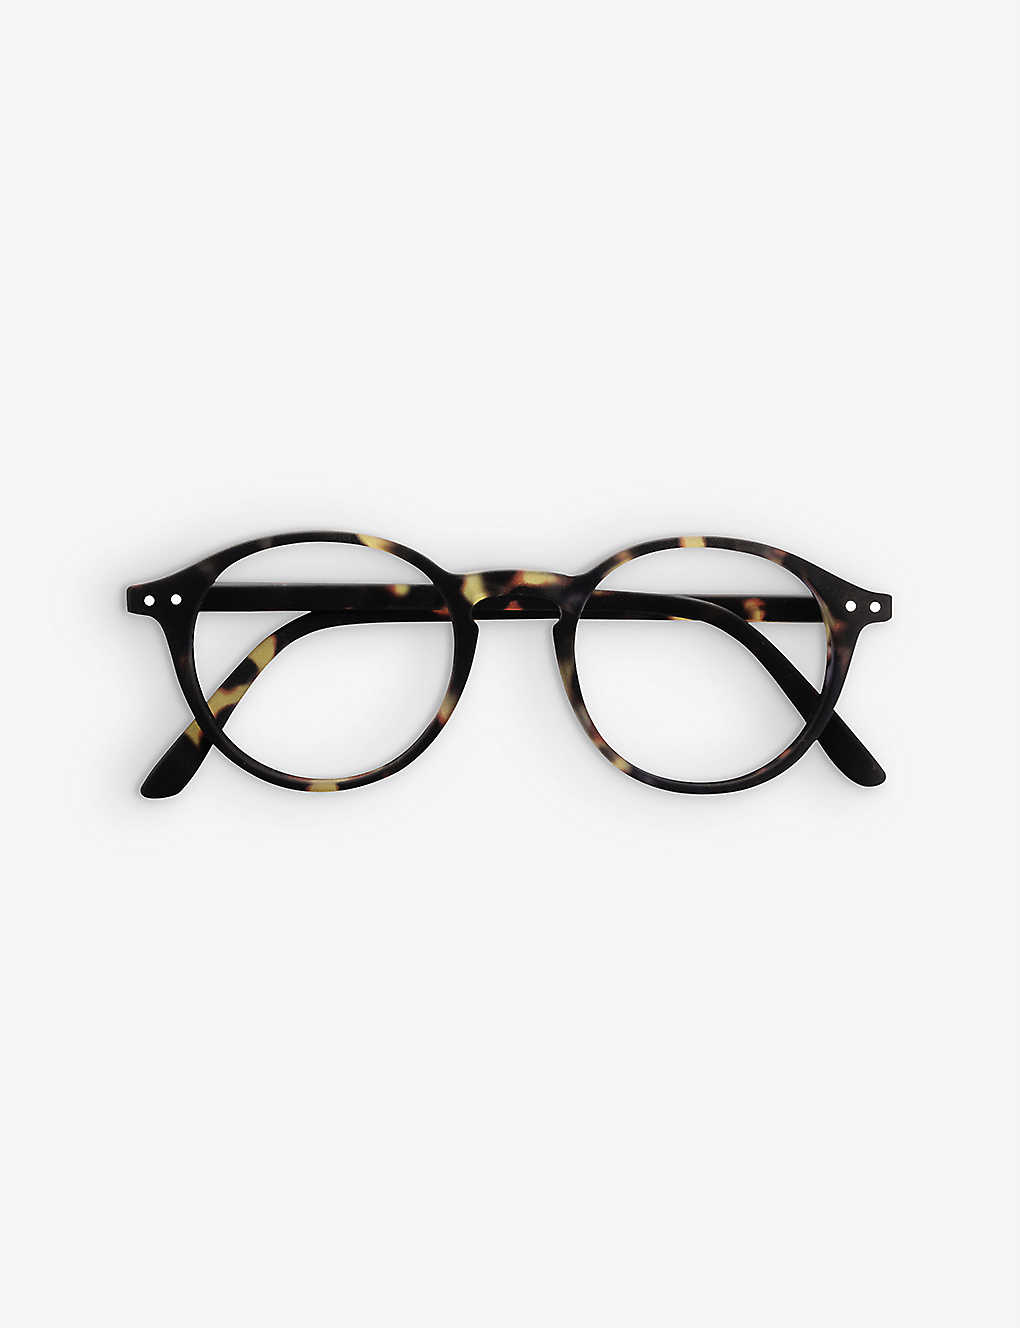 Shop Izipizi Women's Tortoise Screen #d Round-frame Glasses +1.5